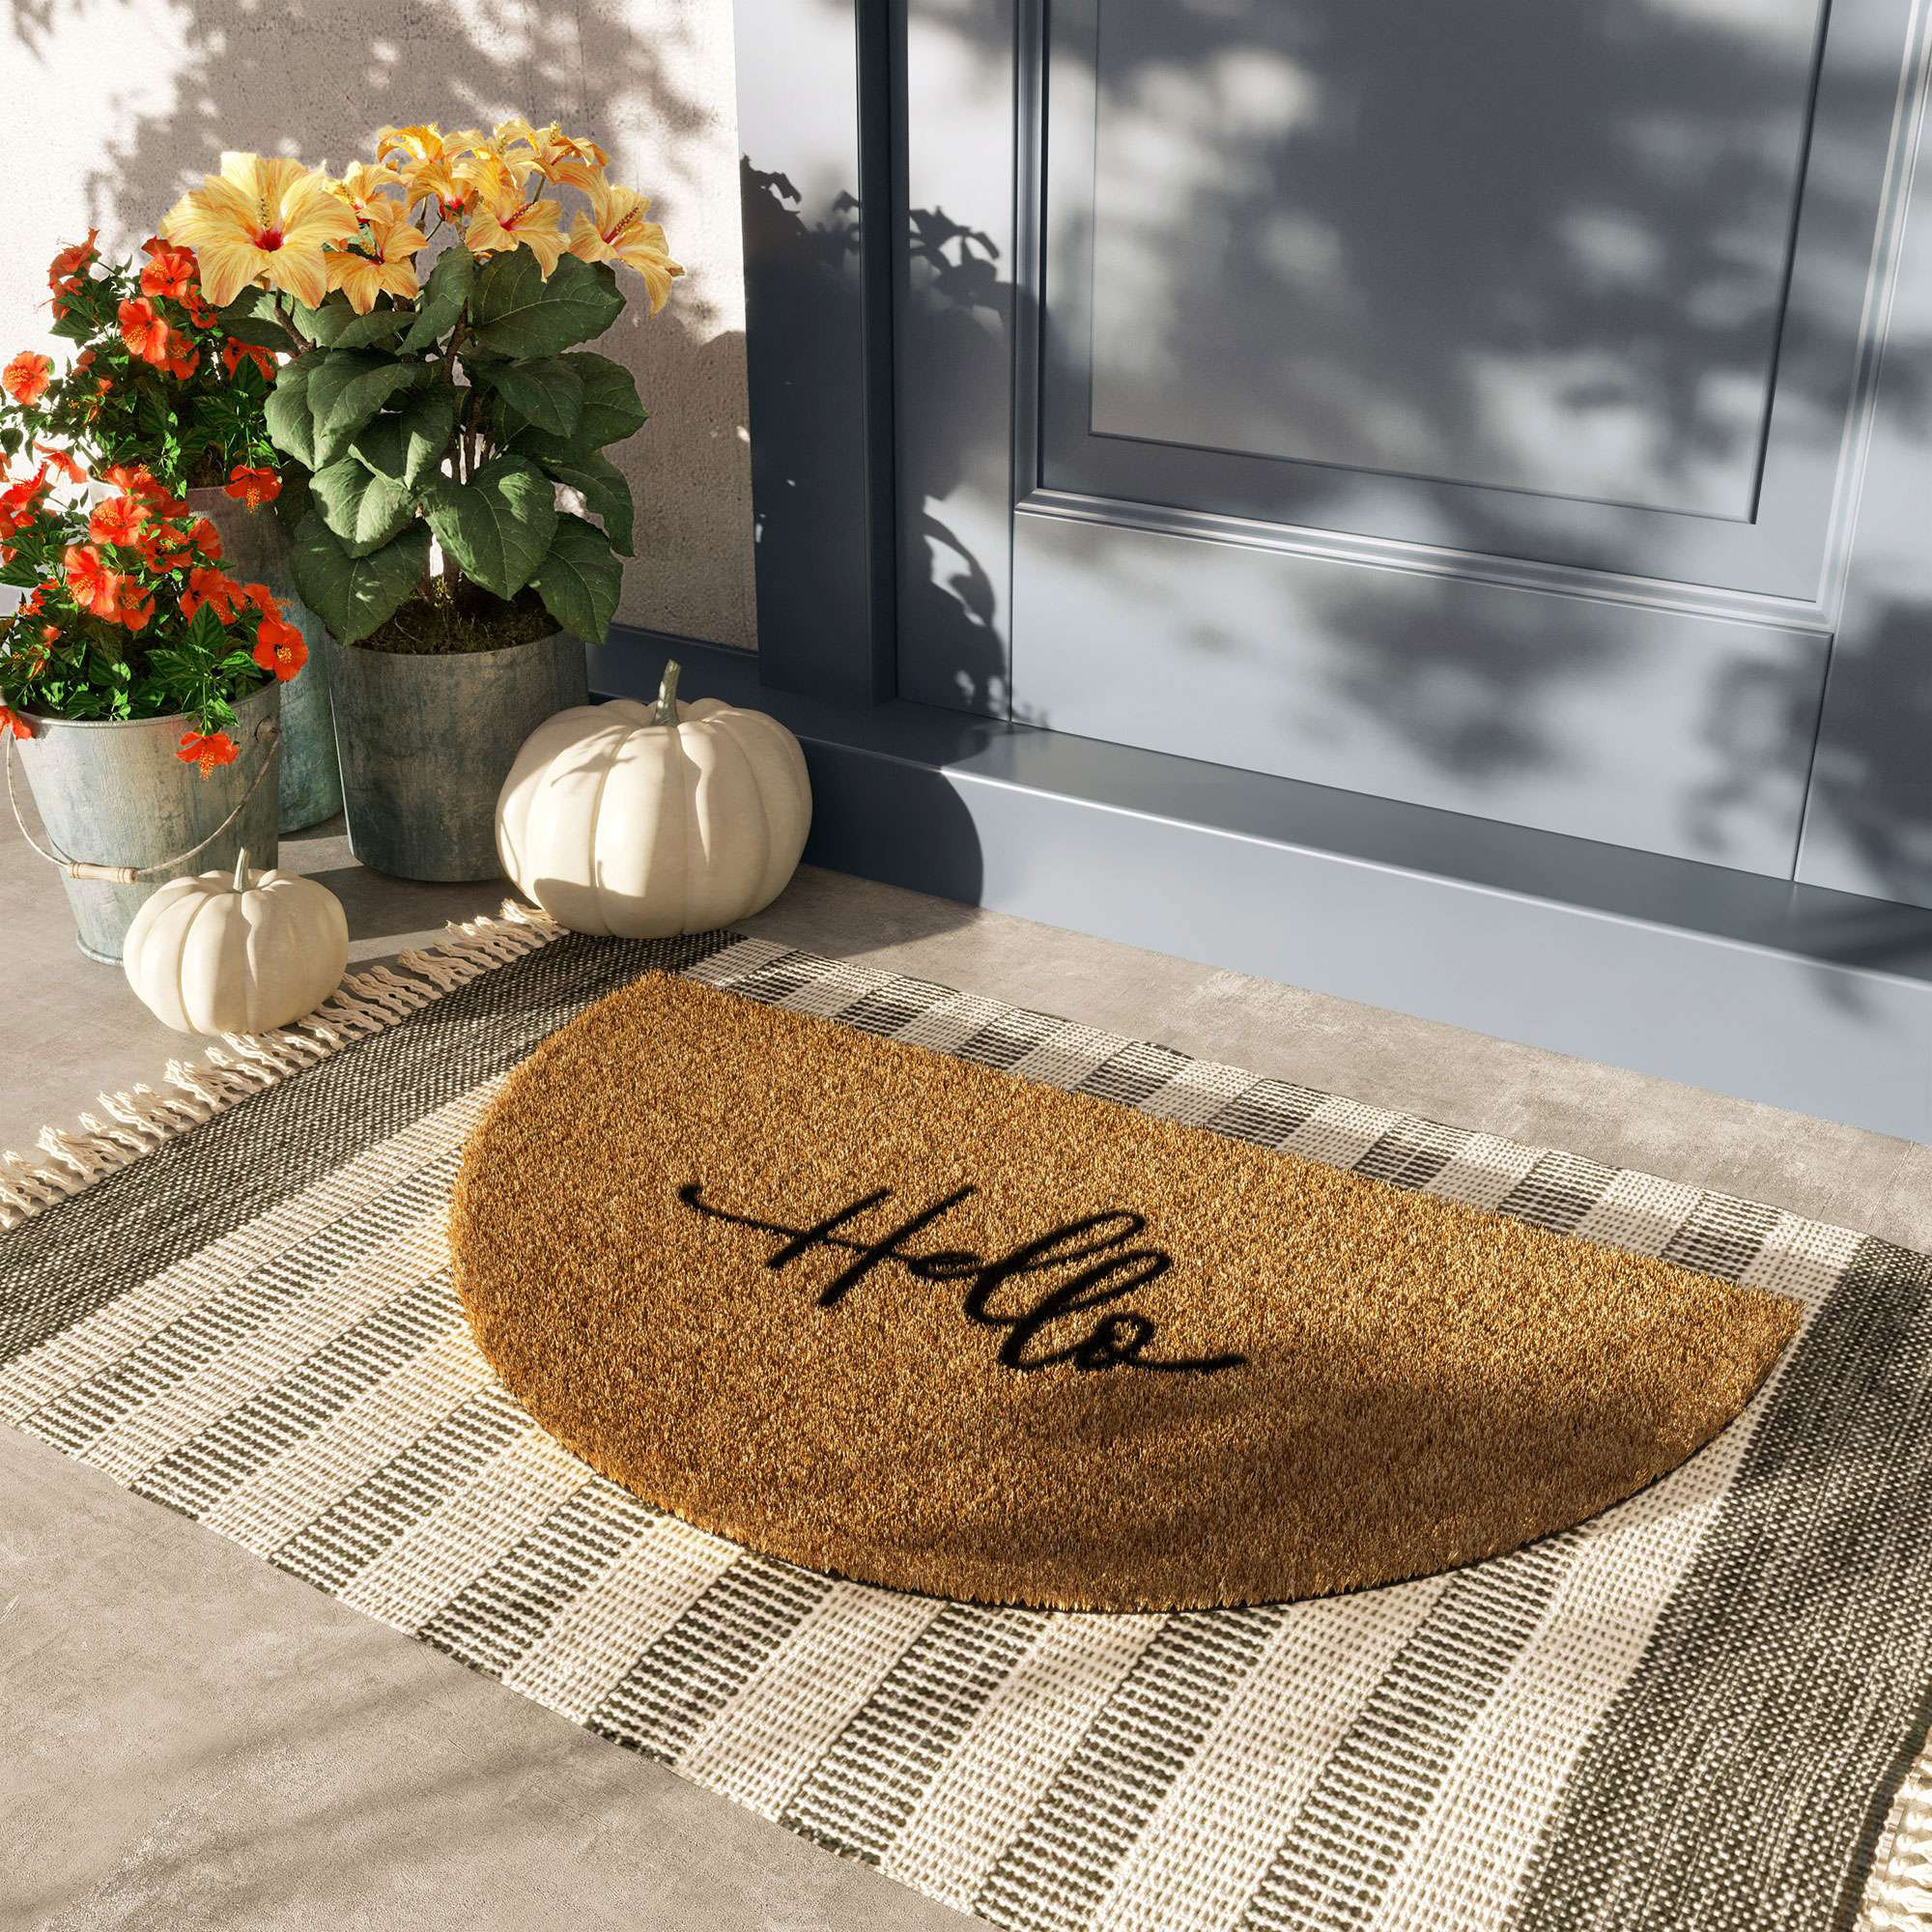 Barnyard Designs 'Oh Hello, See Ya' Doormat Welcome Mat for Outdoors, Large  Front Door Entrance Mat, 30x17, Brown